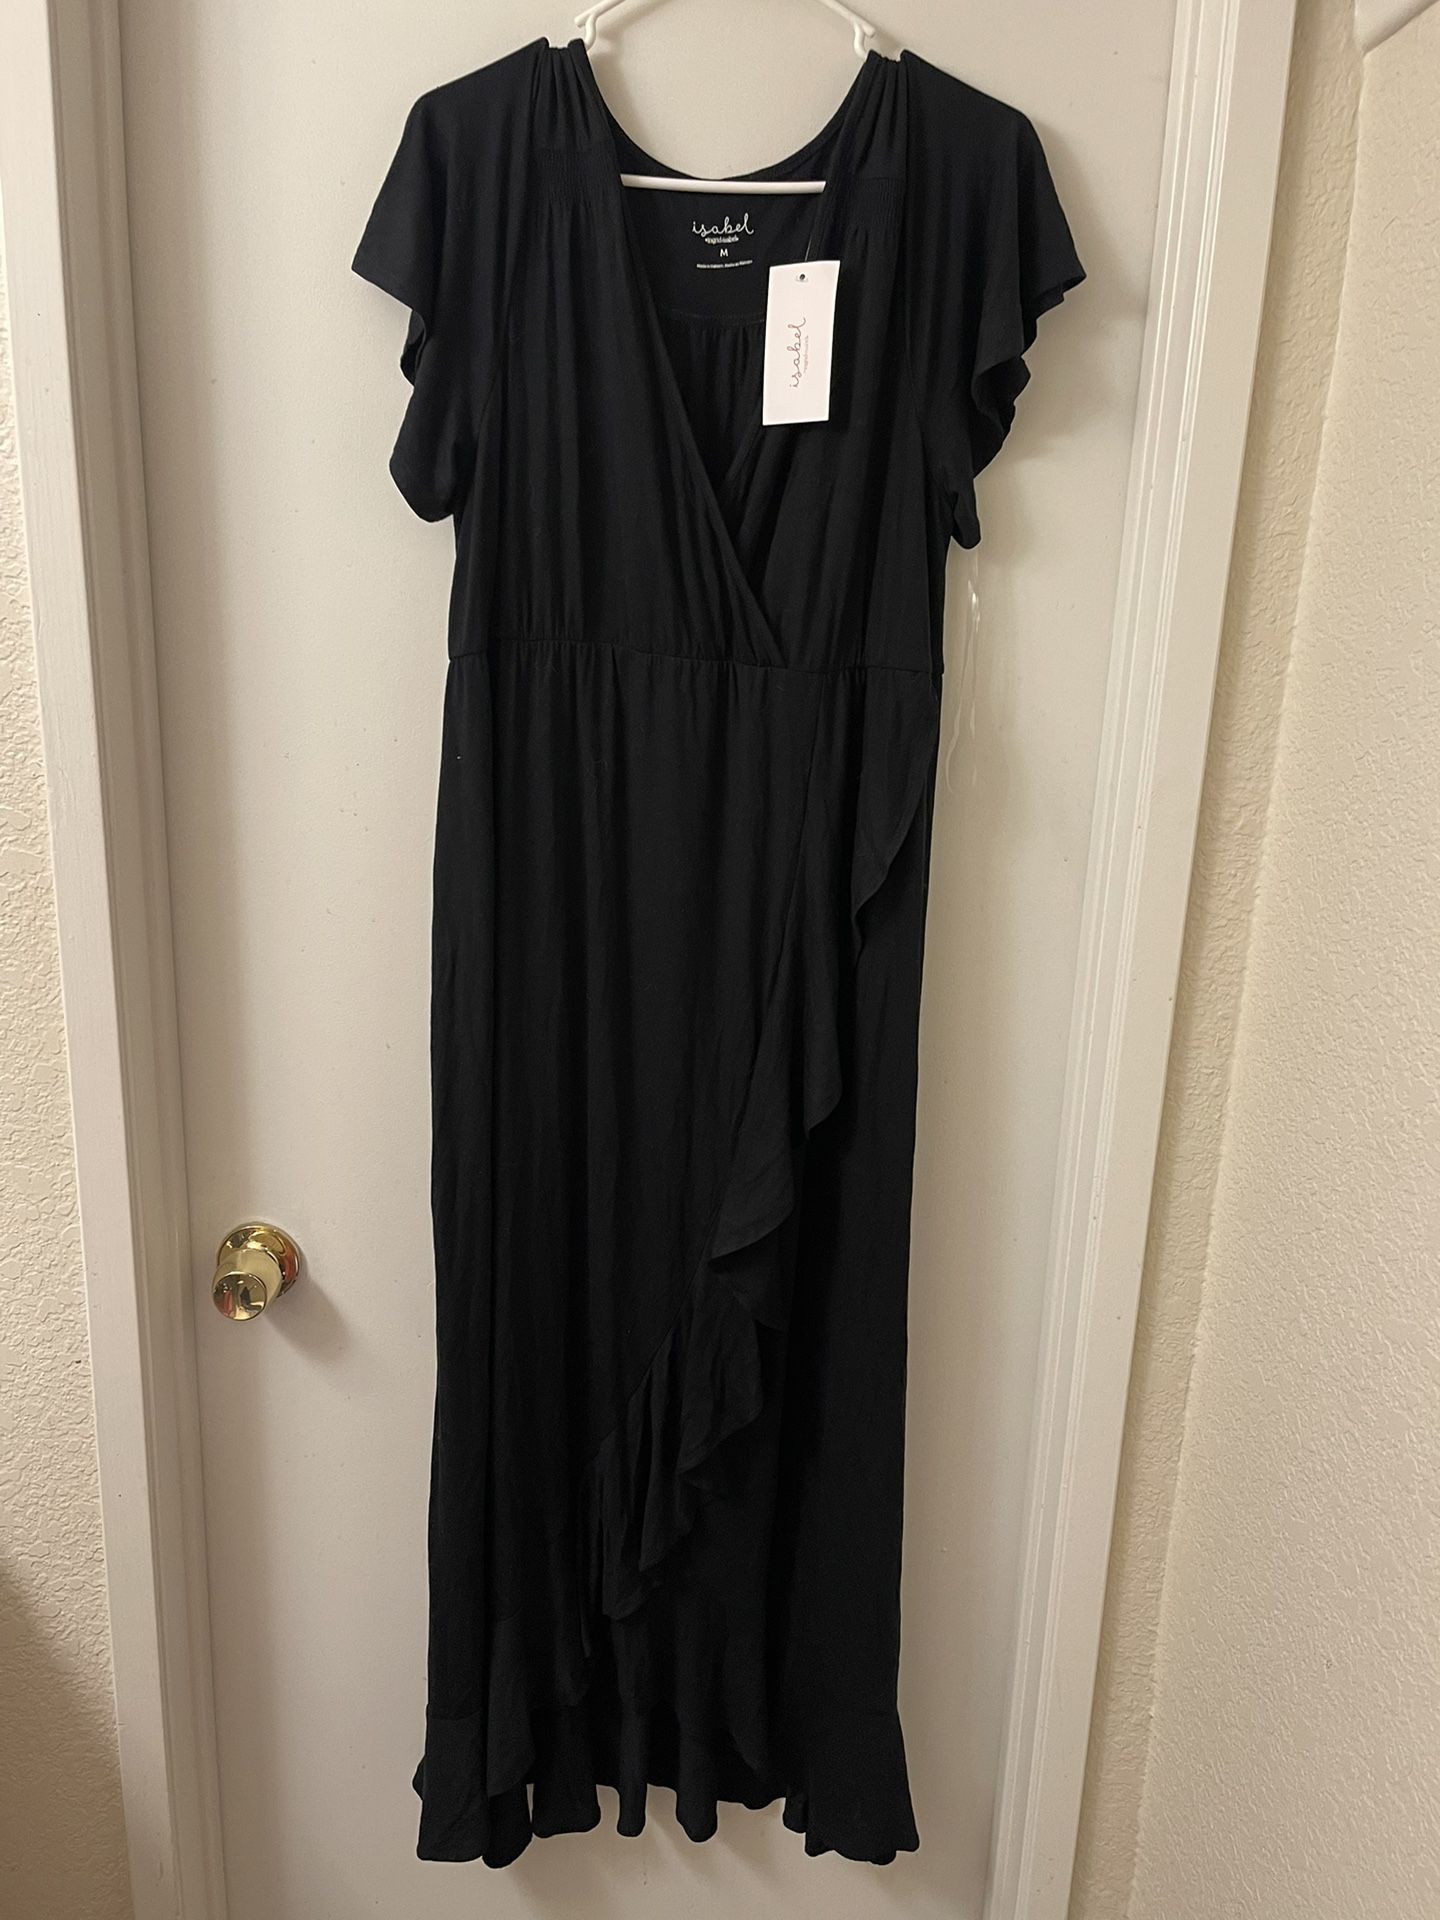 NWT Black Ruffle Side Long Dress 